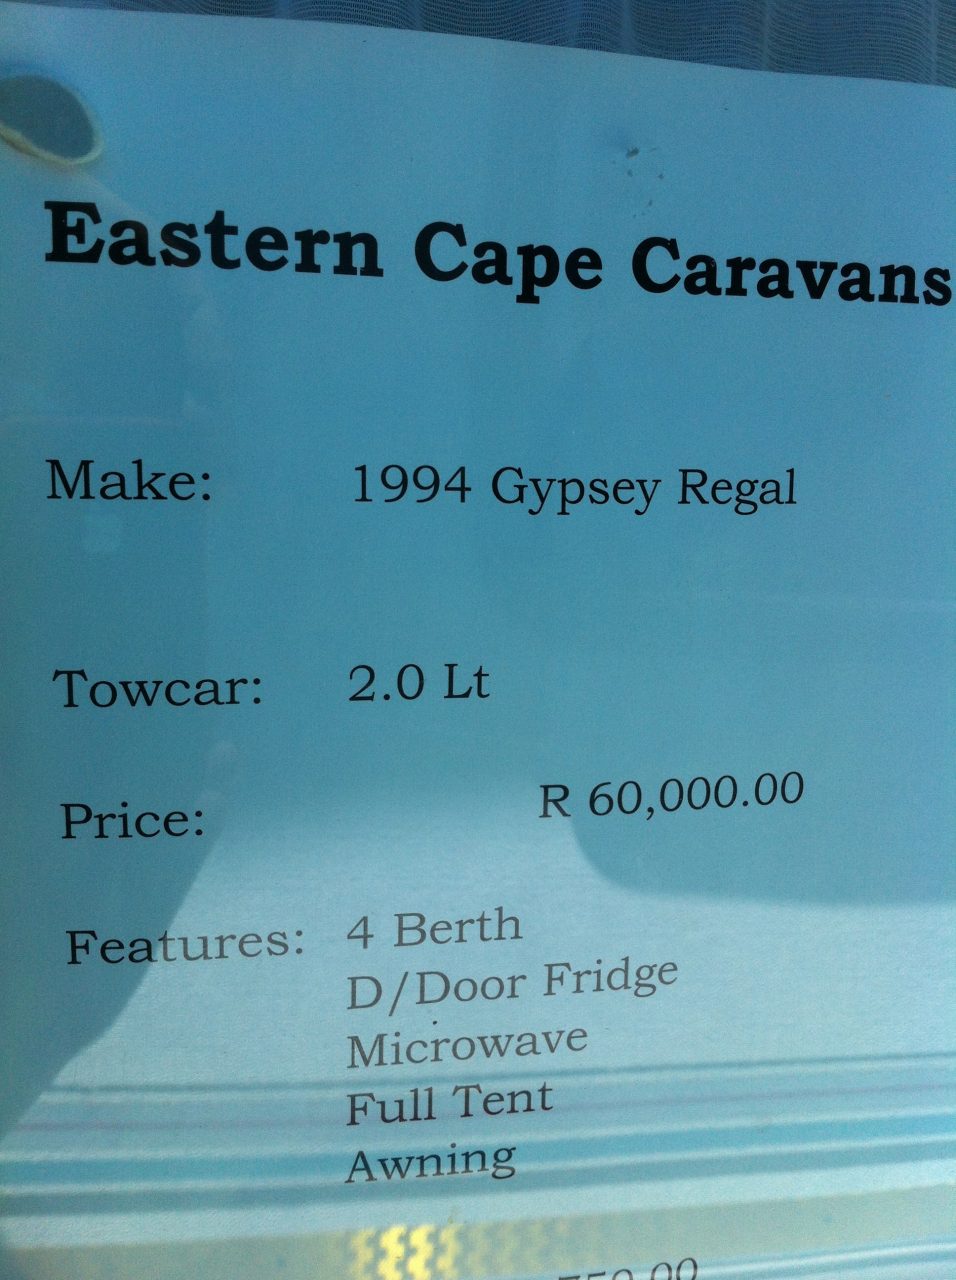 Eastern Cape Caravans